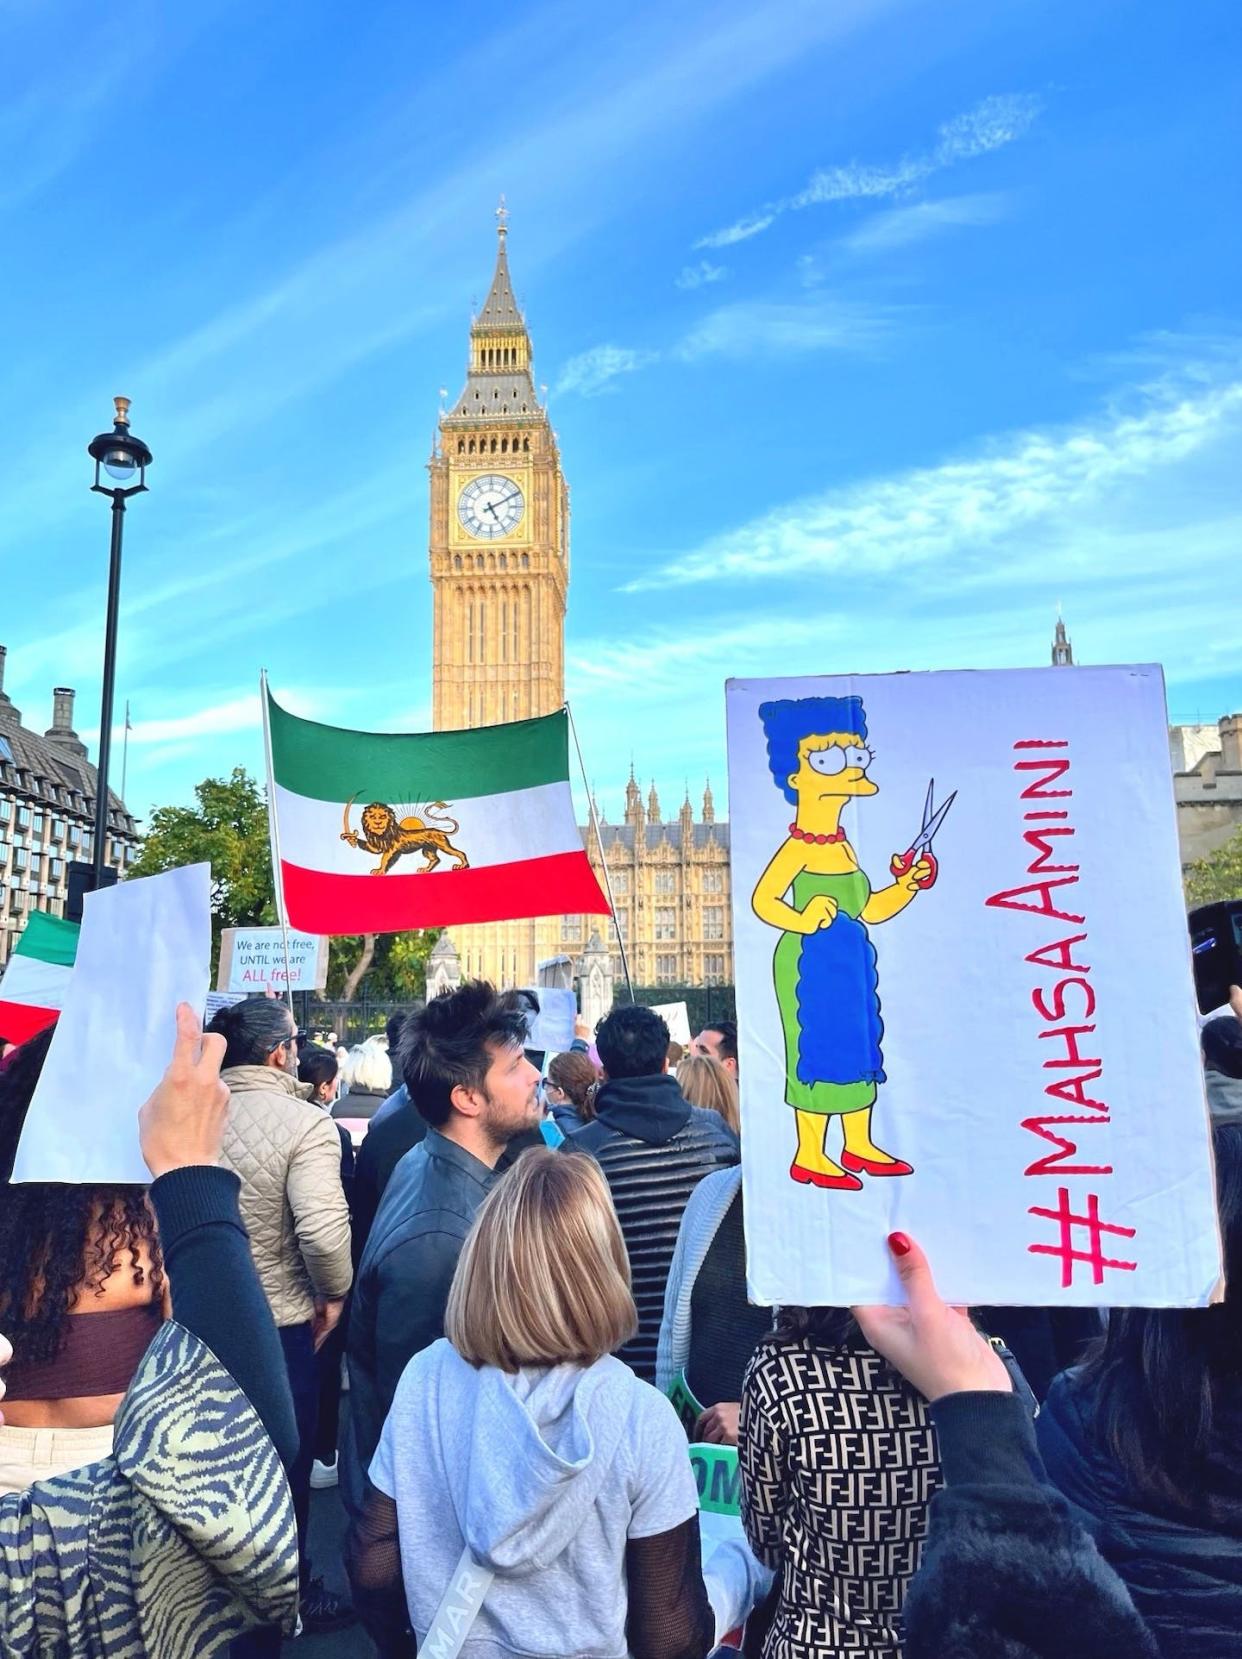 Un cartel con el dibujo de Marge Simpson cortándose el pelo en apoyo a las mujeres iraníes, obra de aleXsandro Palombo, en una manifestación en Londres. <a href="https://twitter.com/PalomboArtist/status/1581634741840666624?s=20&t=DH5V4hIgezRW7ELoZsco3A" rel="nofollow noopener" target="_blank" data-ylk="slk:aleXsandro Palombo / TW;elm:context_link;itc:0;sec:content-canvas" class="link ">aleXsandro Palombo / TW</a>